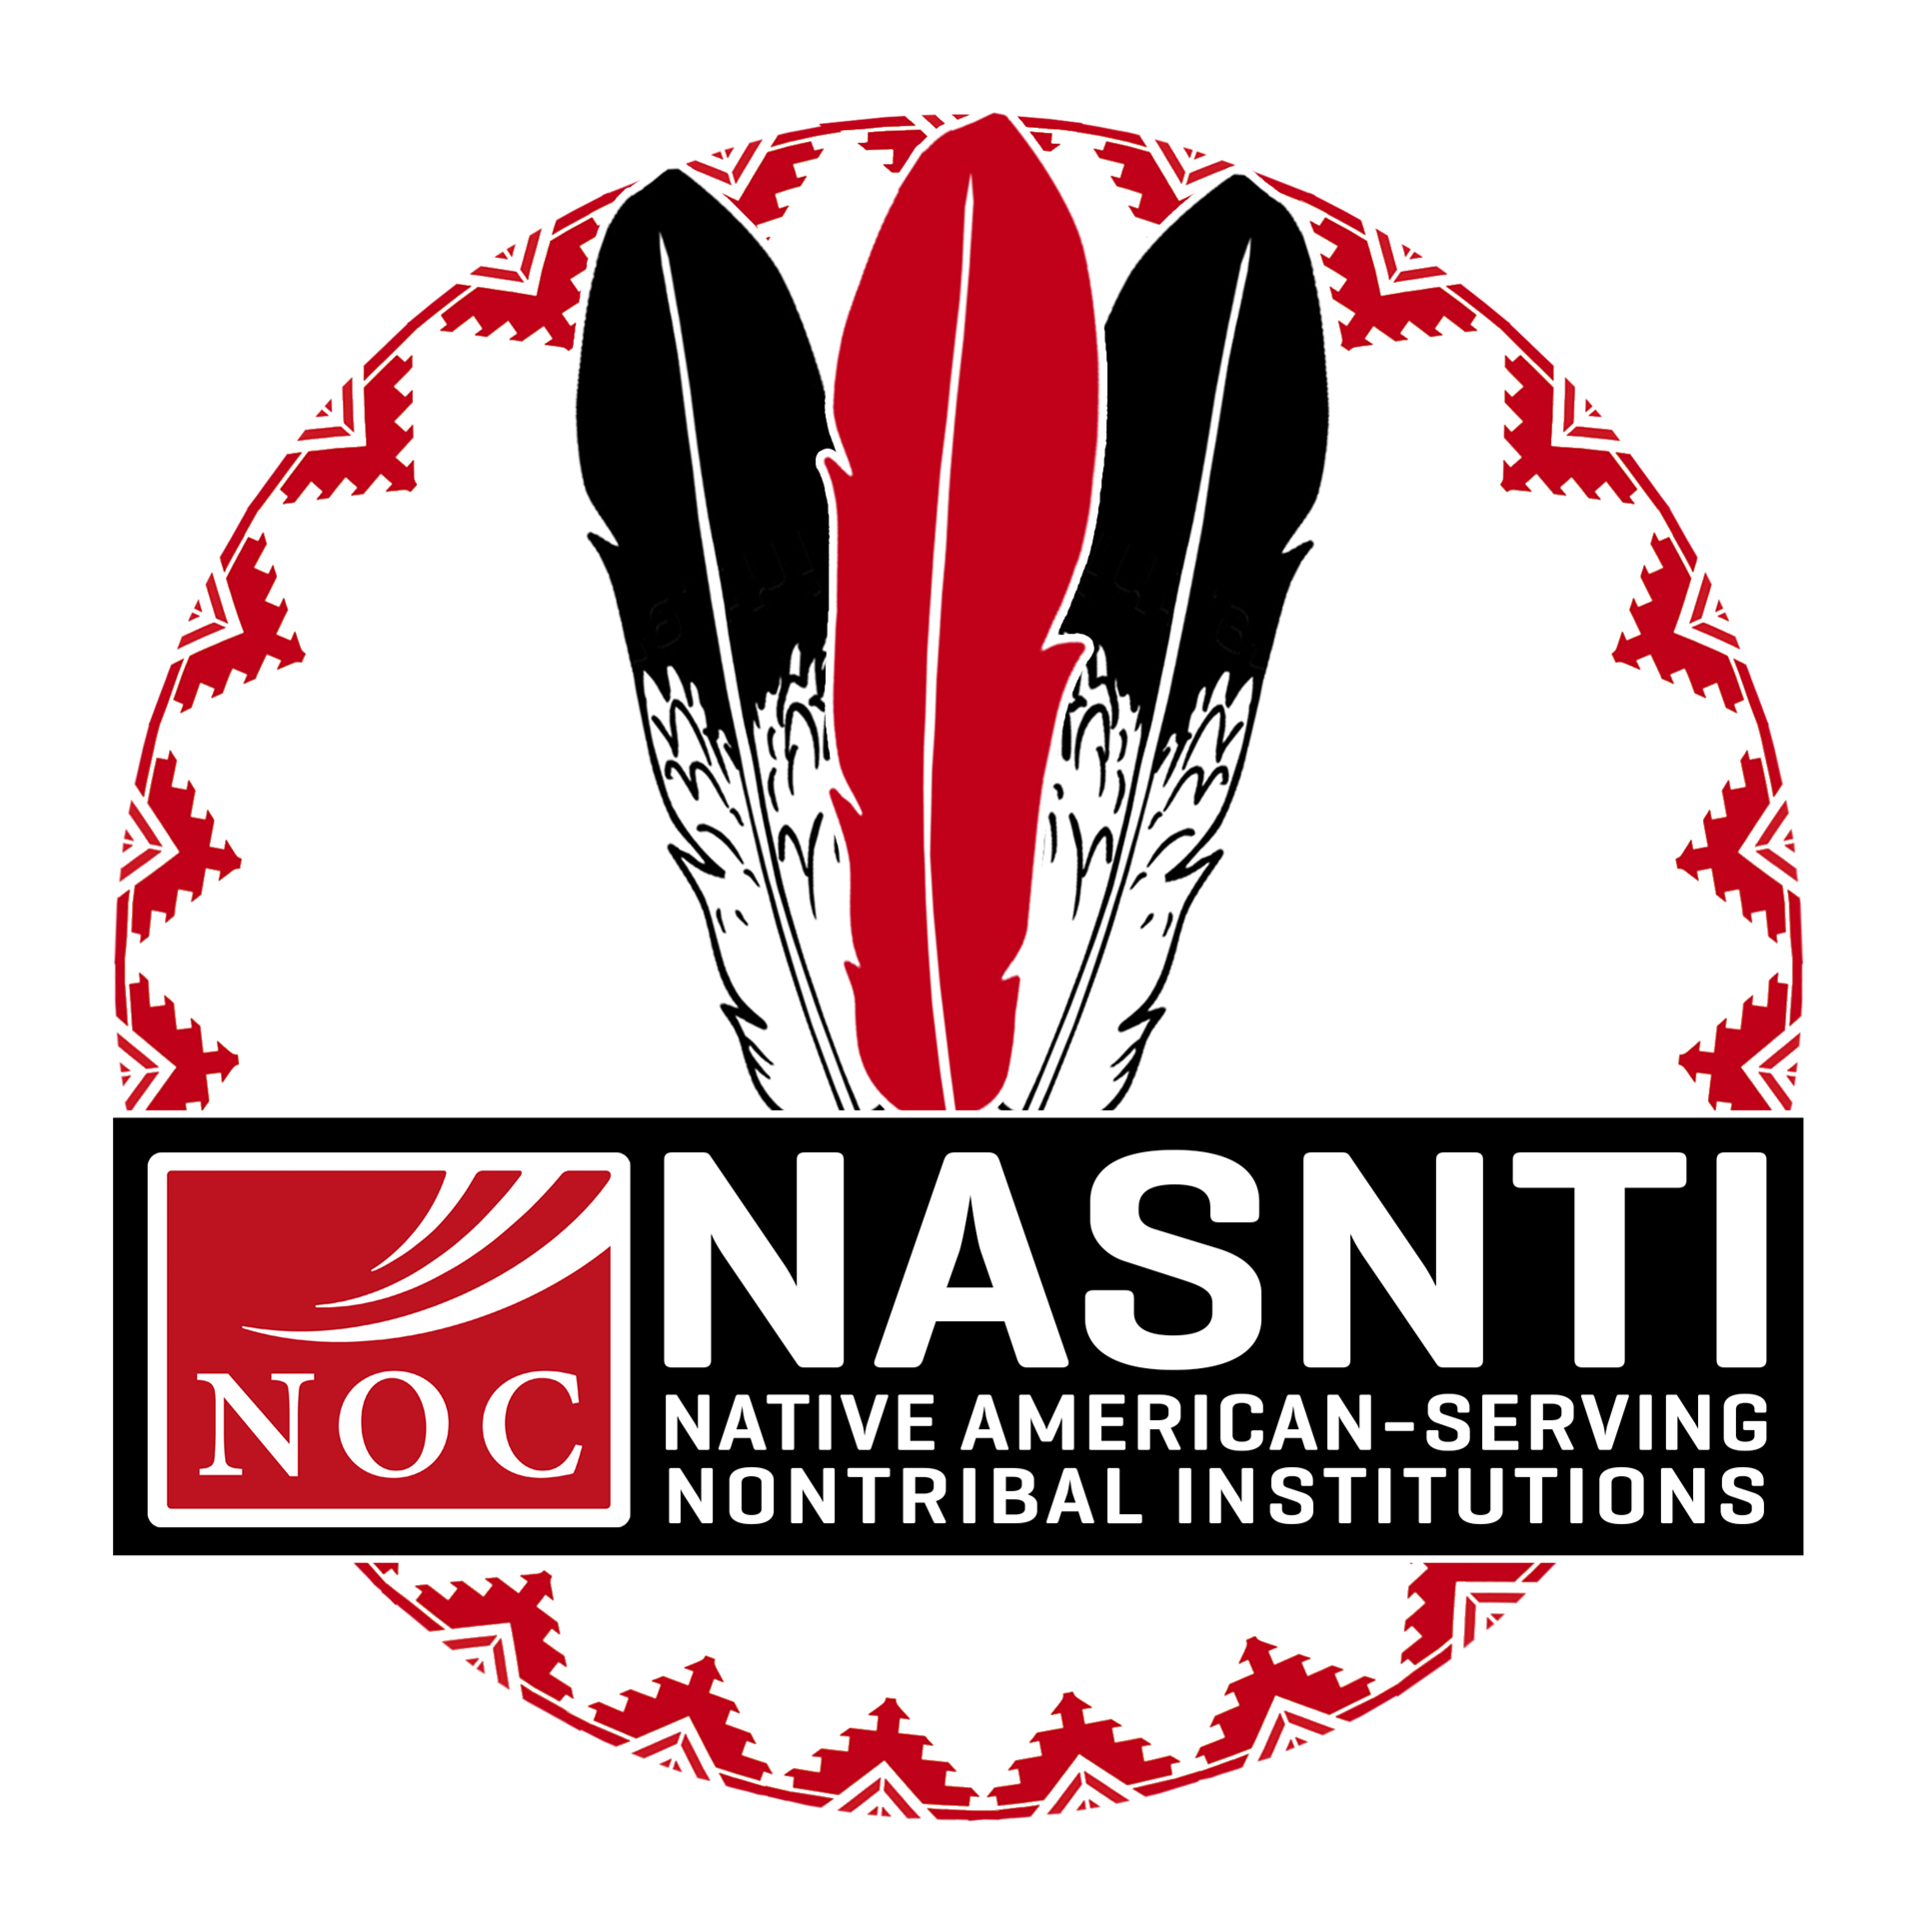 NOC earns NASNTI supplemental grant